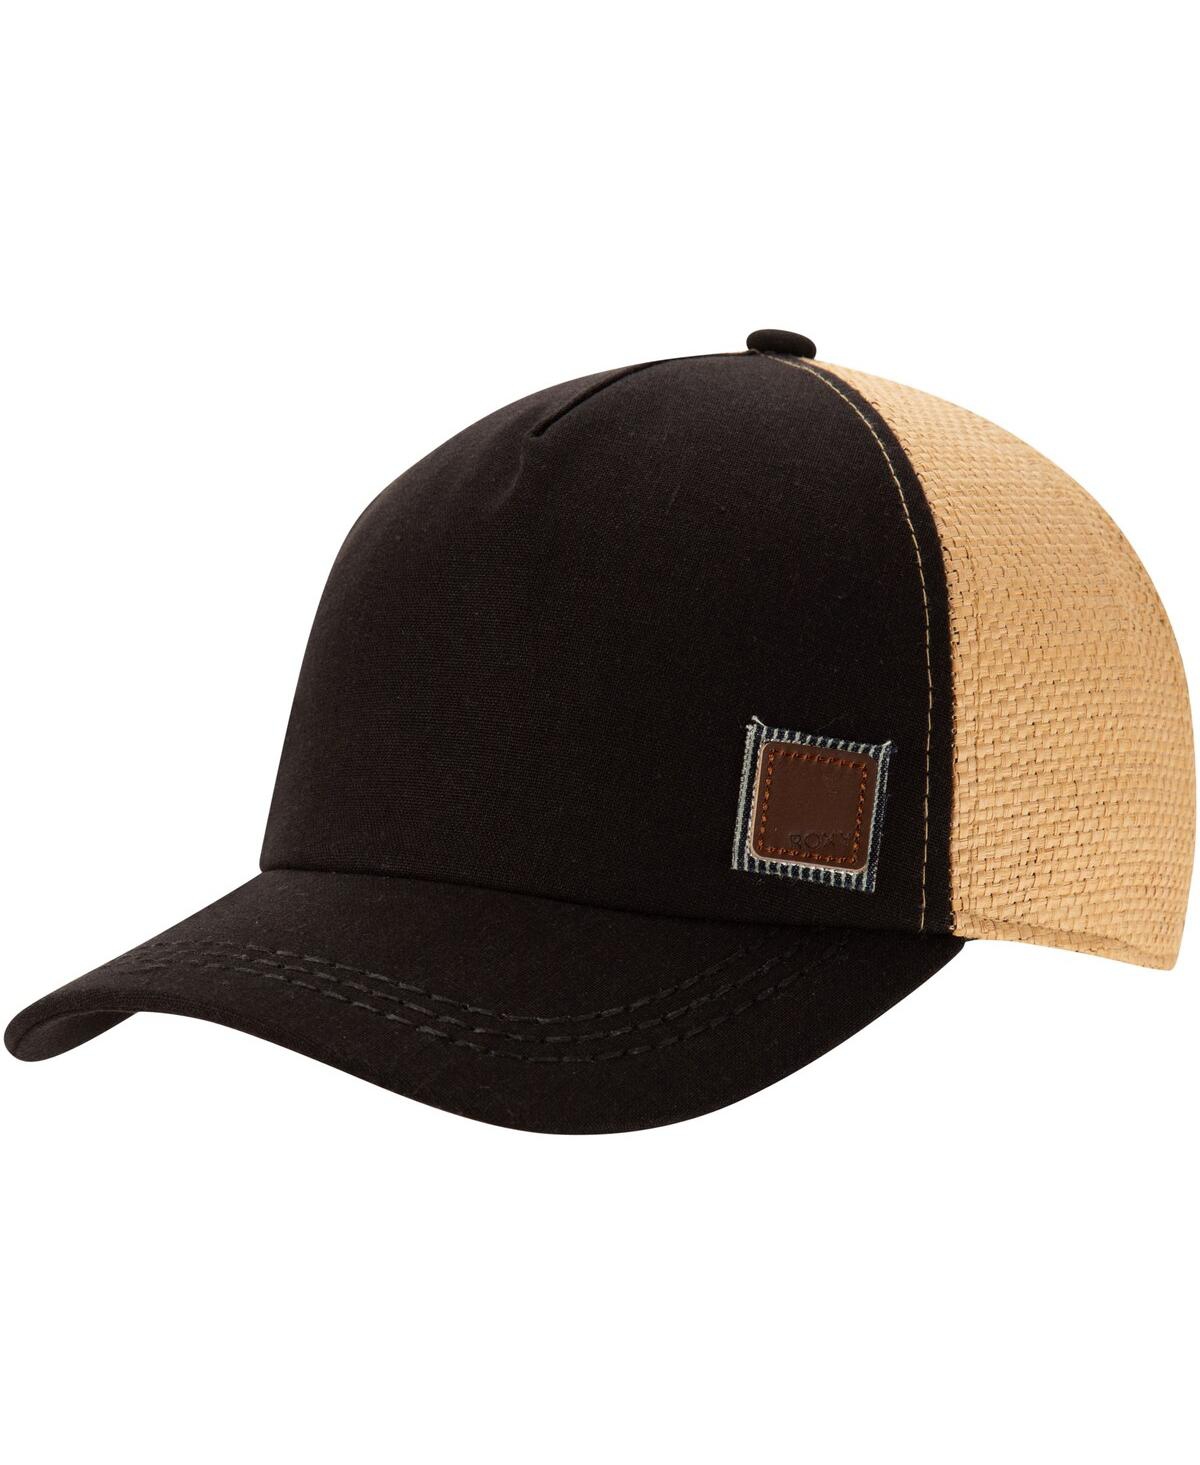 Roxy Women's Quiksilver Black  Incognito Adjustable Trucker Hat